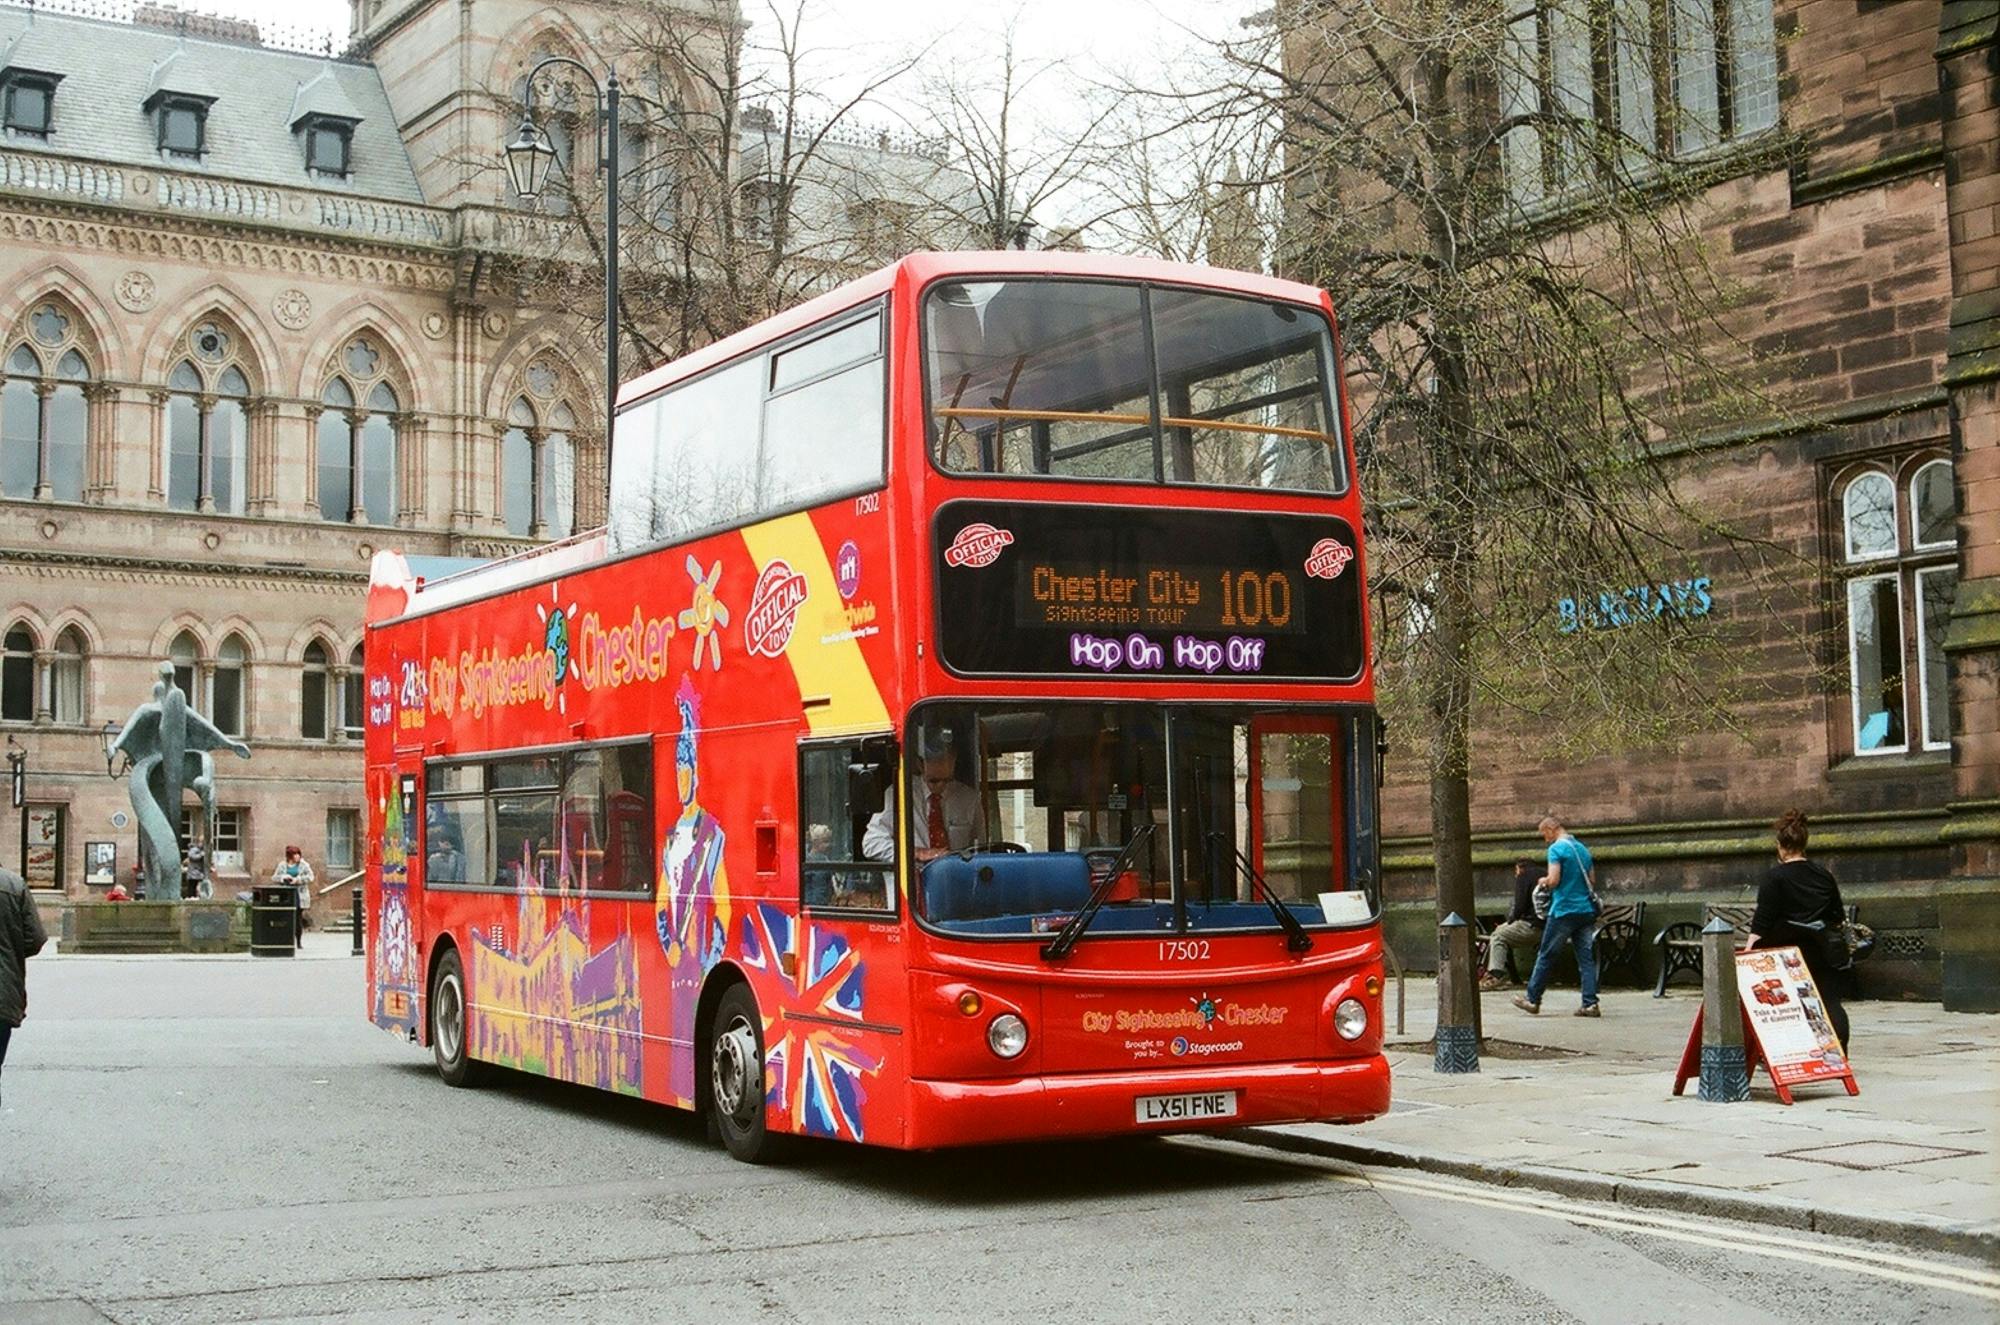 Wycieczka autobusowa typu hop-on hop-off po Chester po City Sightseeing